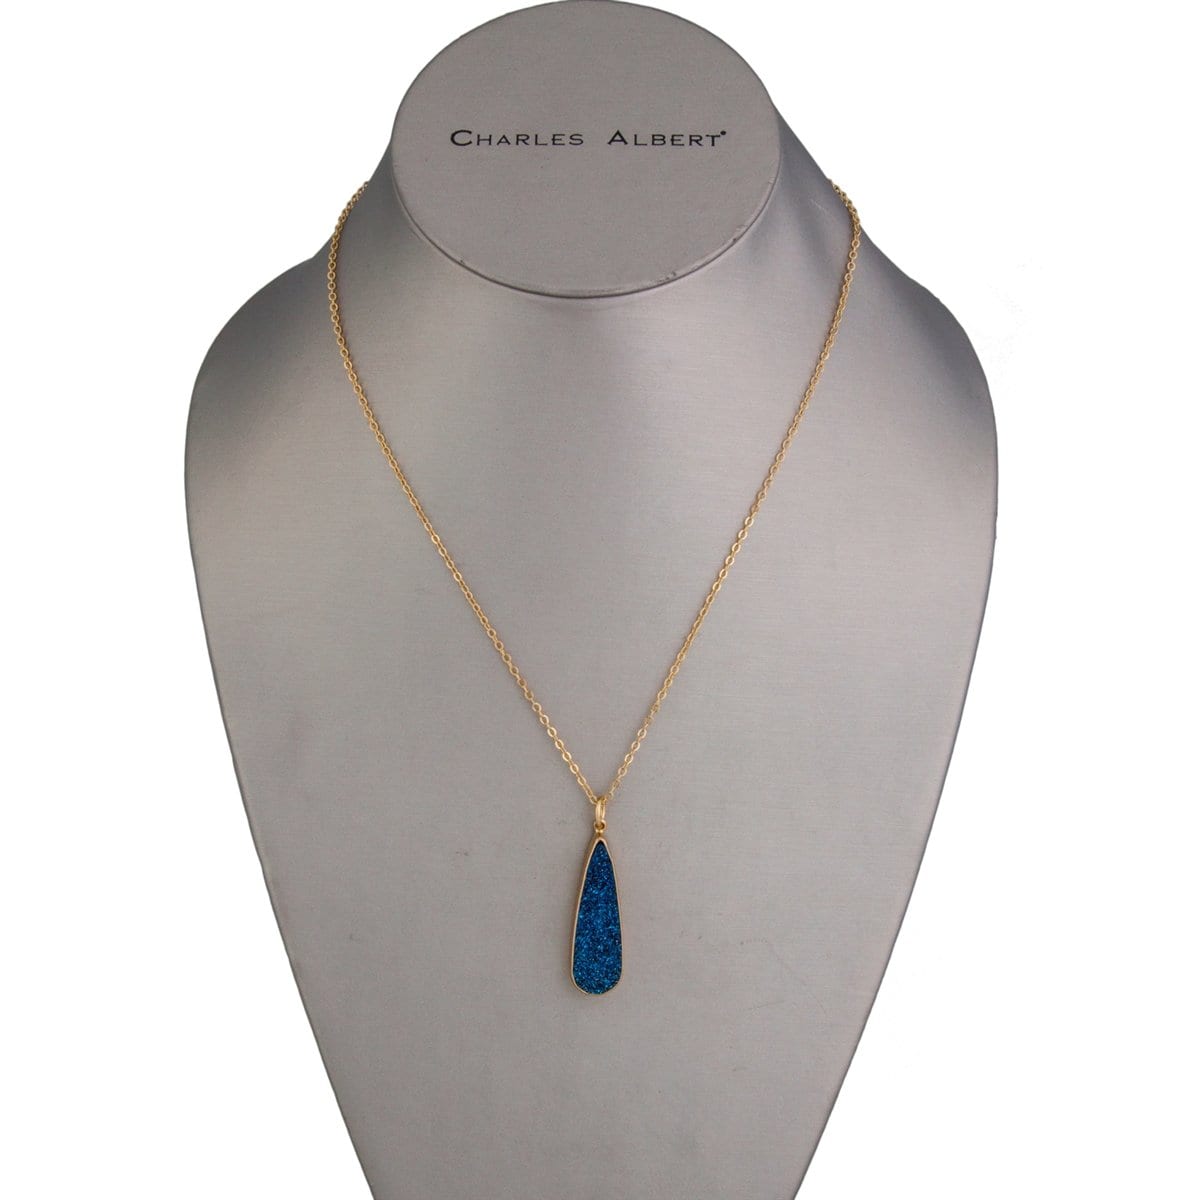 Mermaid Cultured Sea Glass Shard Necklace - Cobalt Blue